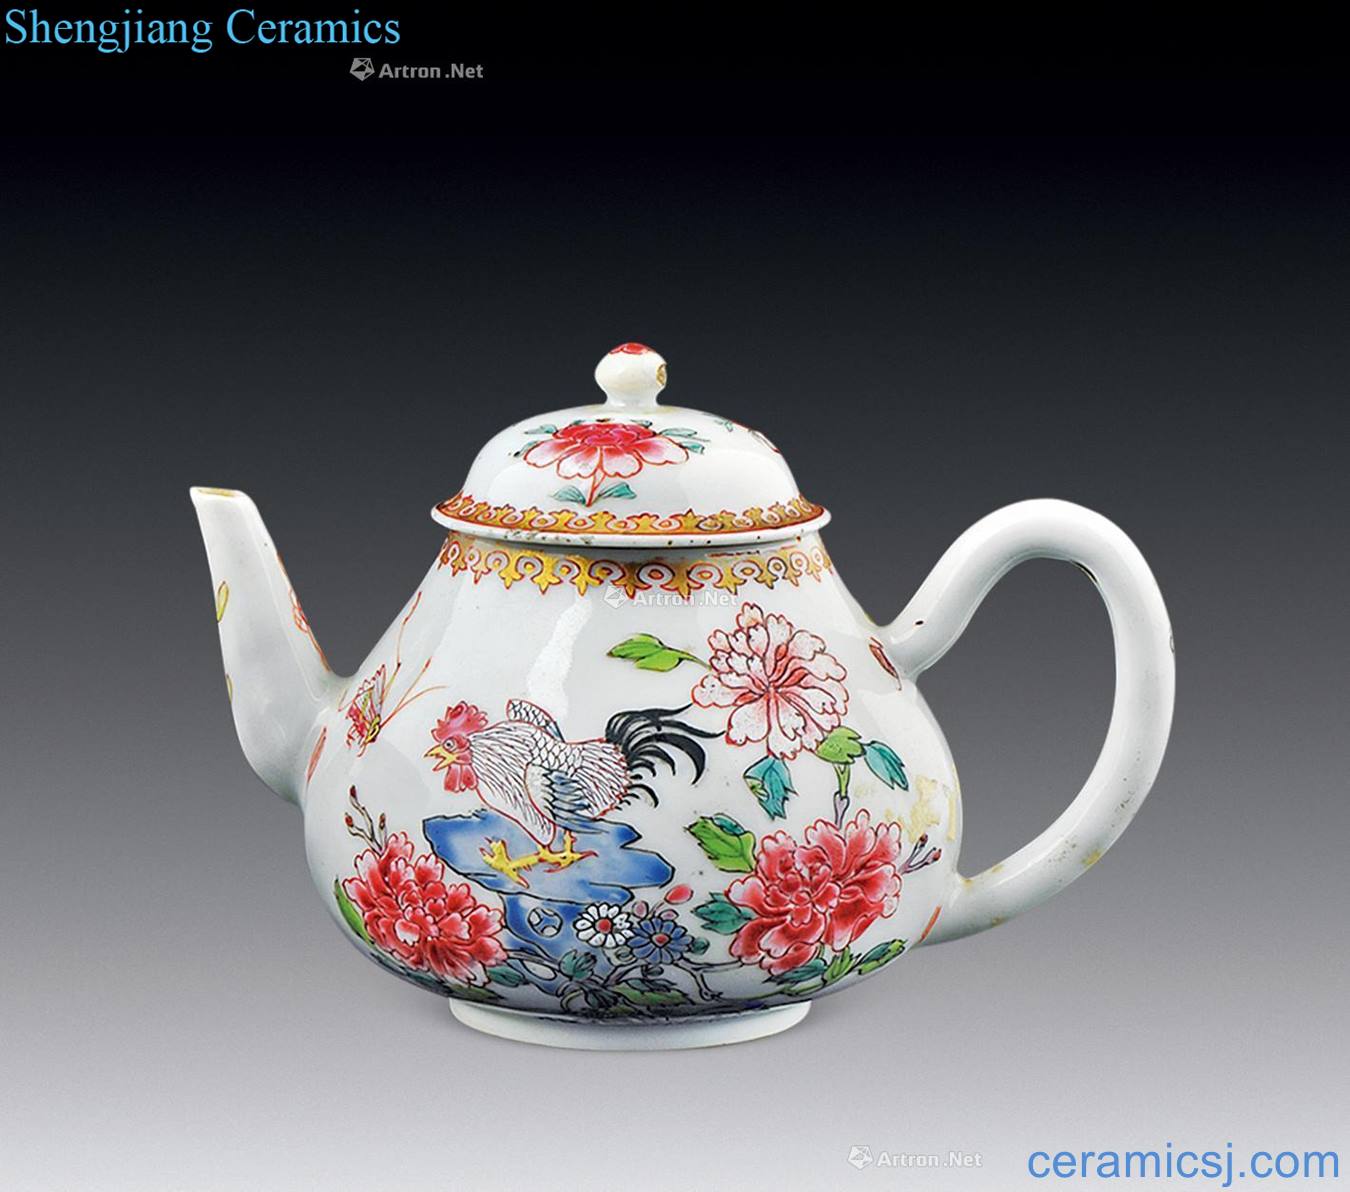 In the qing dynasty powder enamel grain teapot